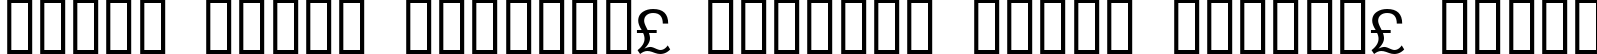 Пример написания шрифтом WP TypographicSymbols текста на белорусском